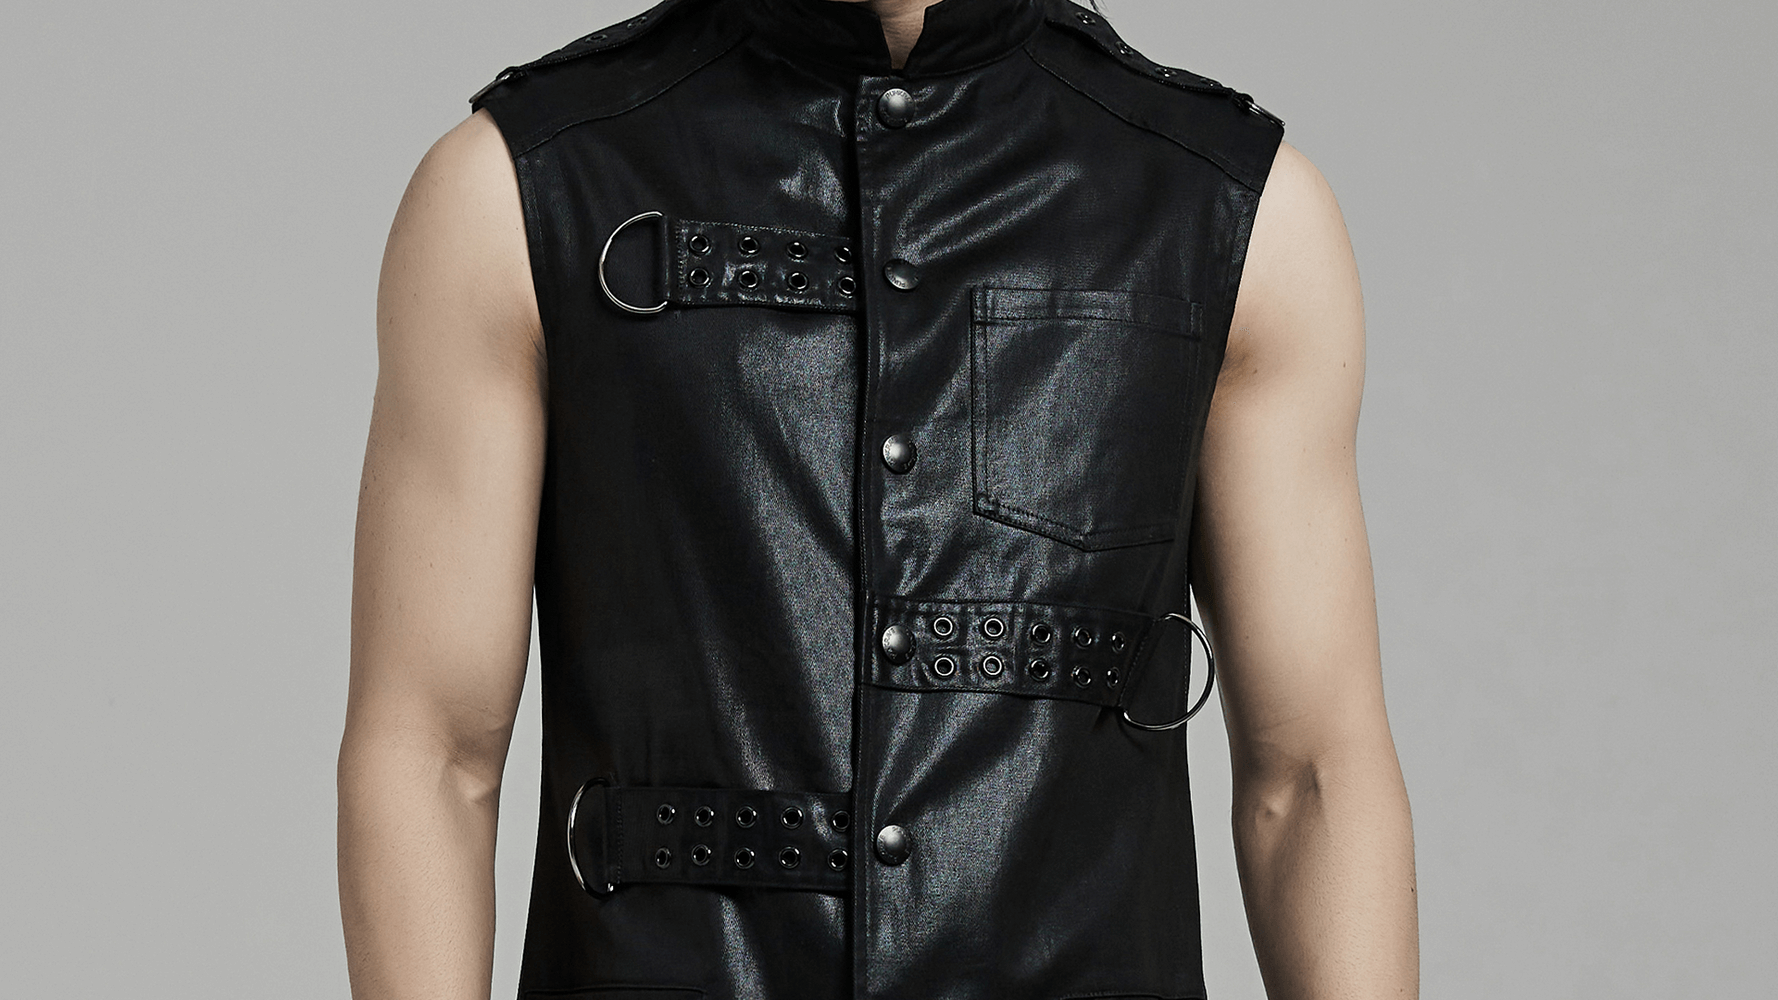 Men's Leather Punk Style Long Vest with Straps